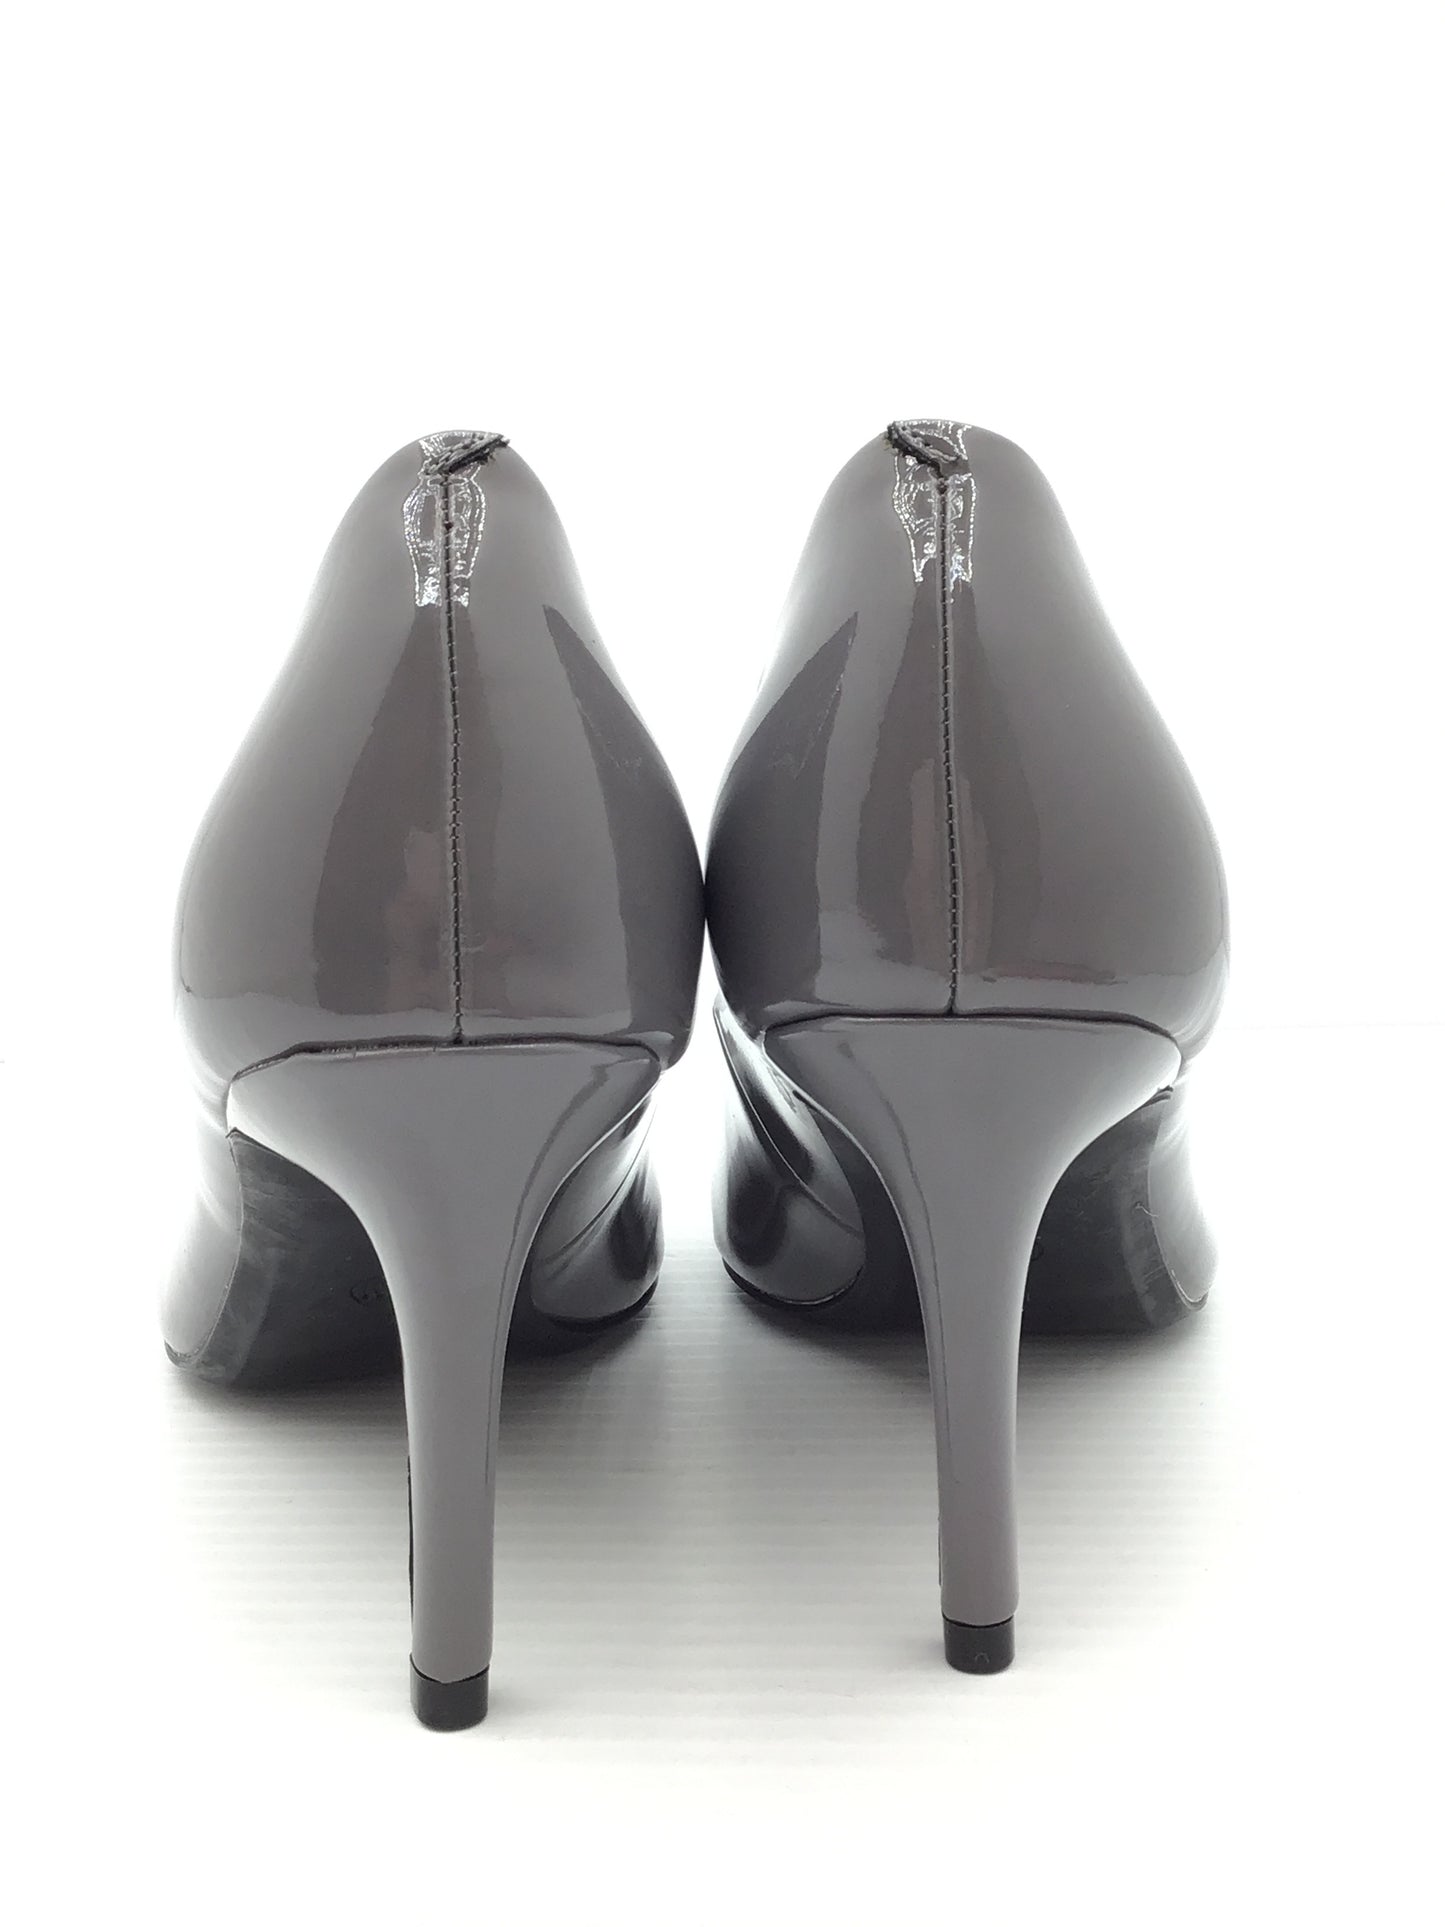 Shoes Heels Stiletto By Calvin Klein  Size: 7